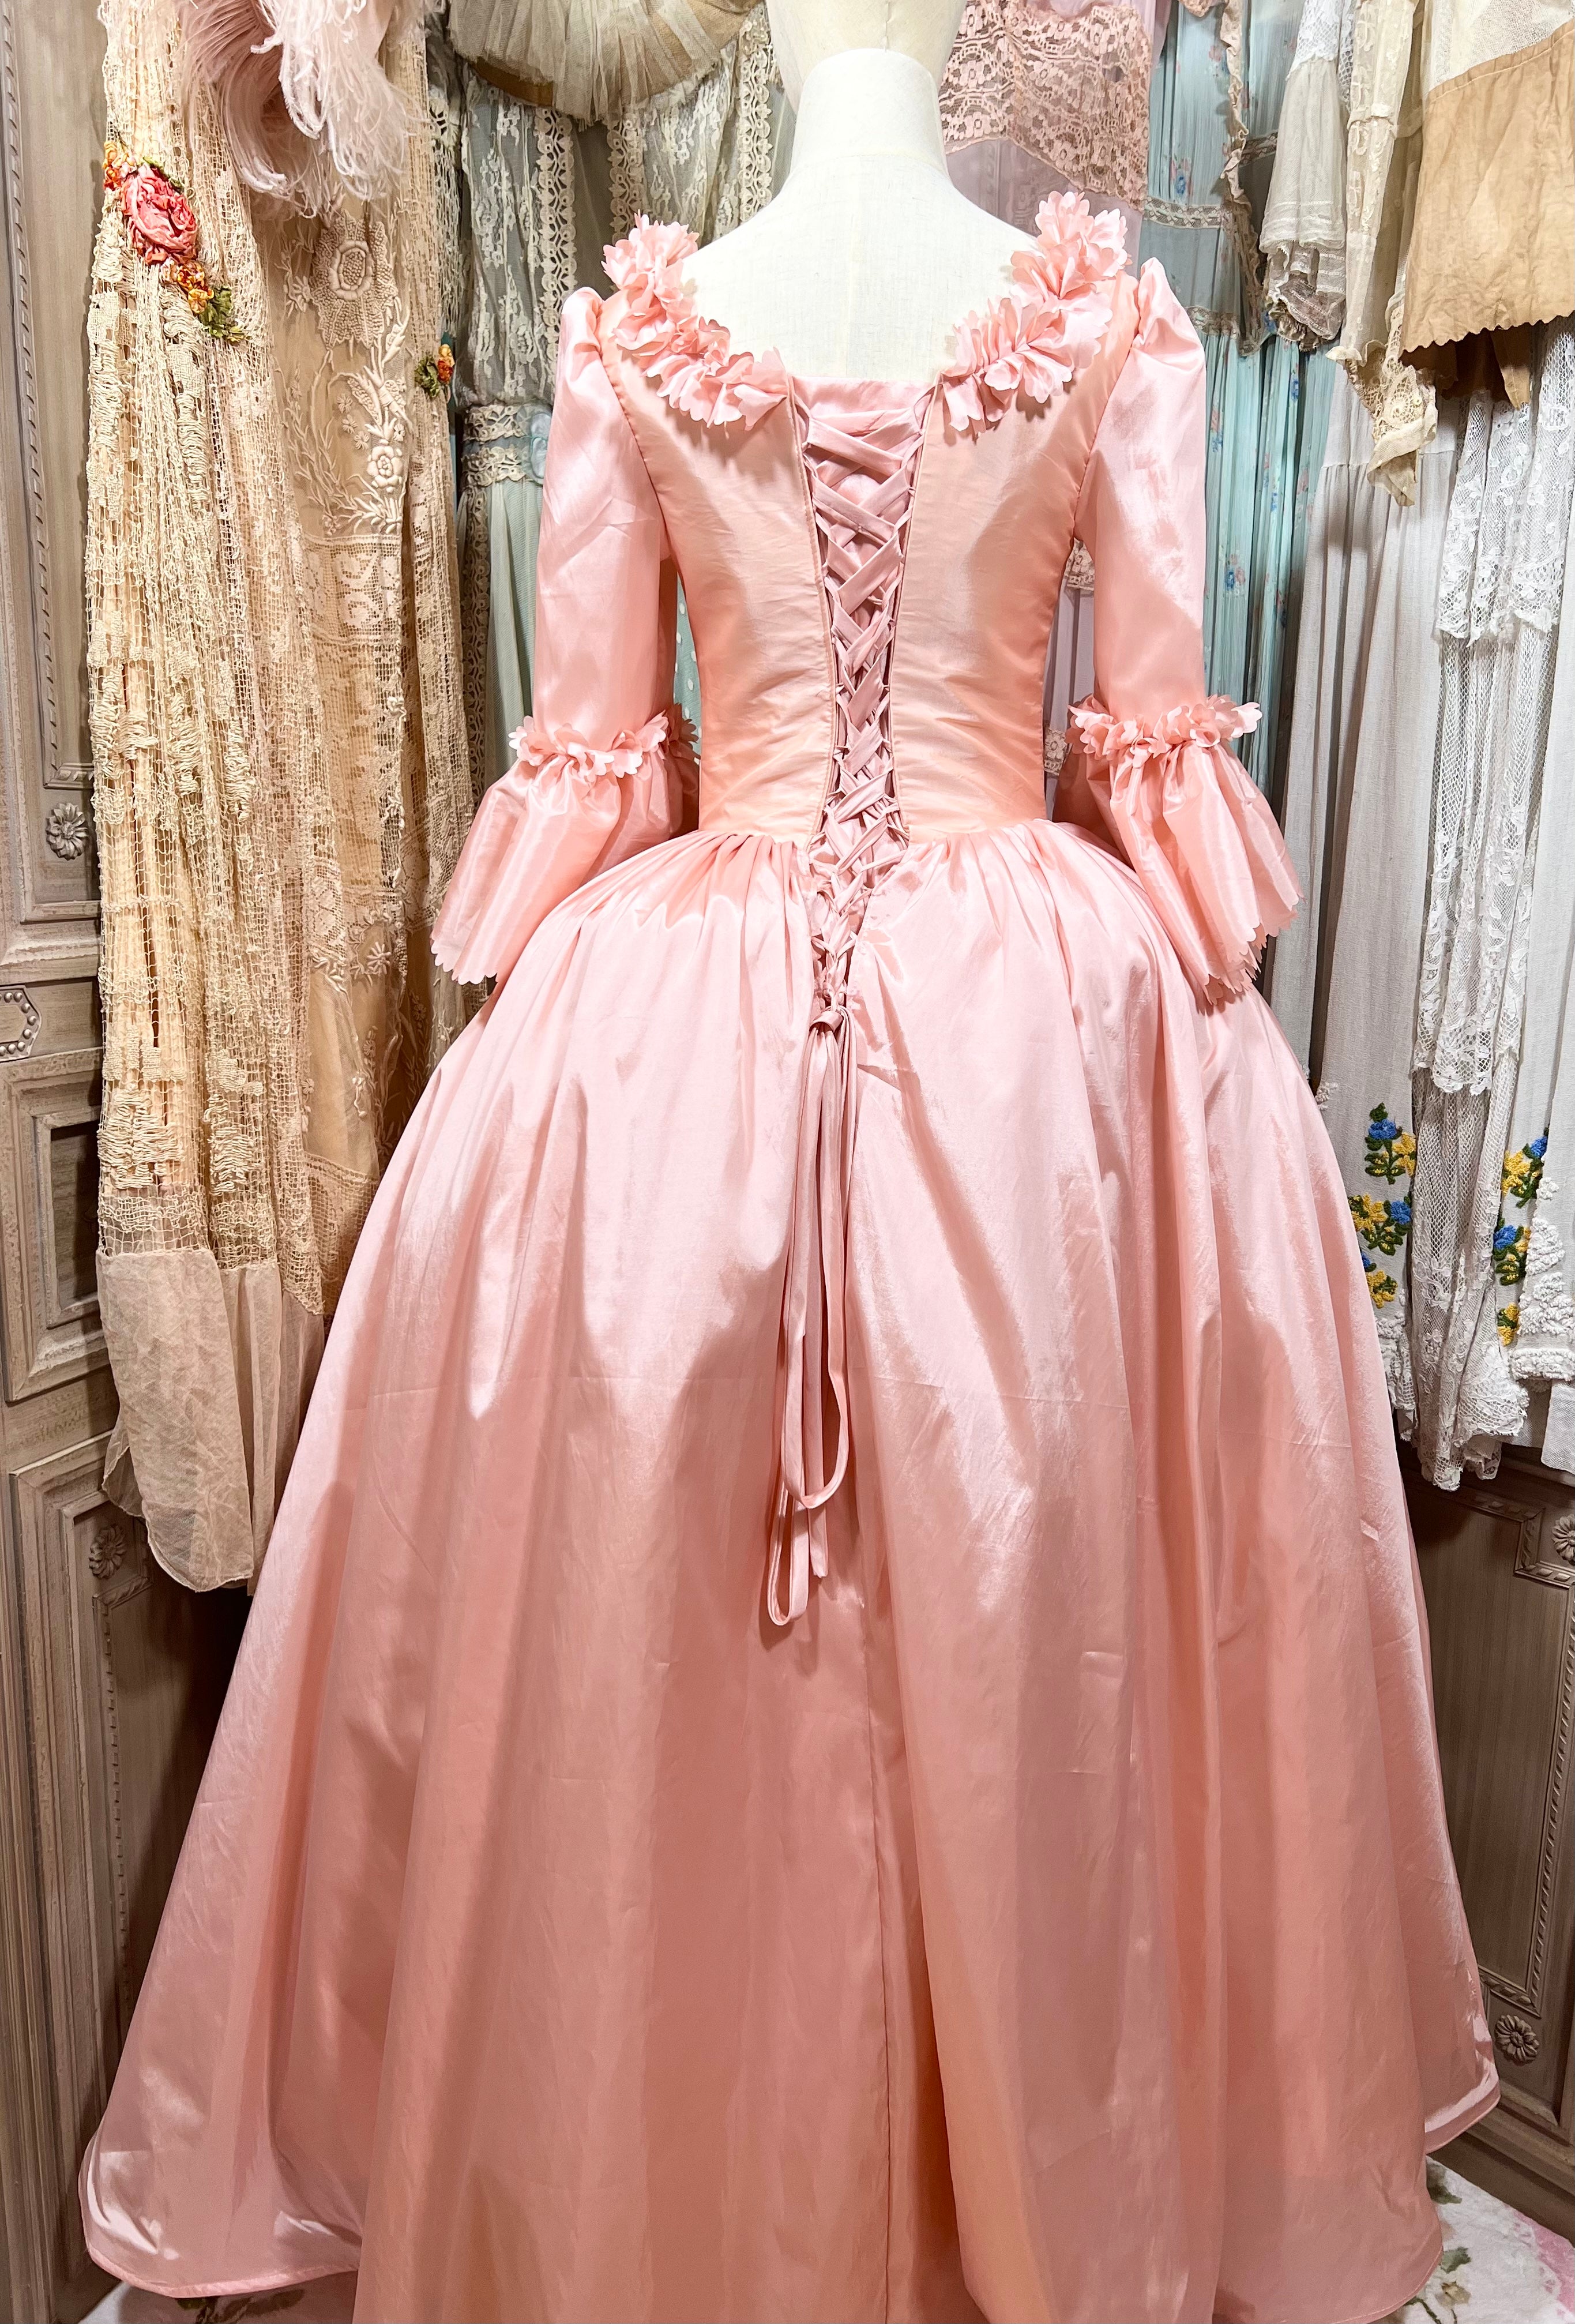 marie antoinette pink dresses